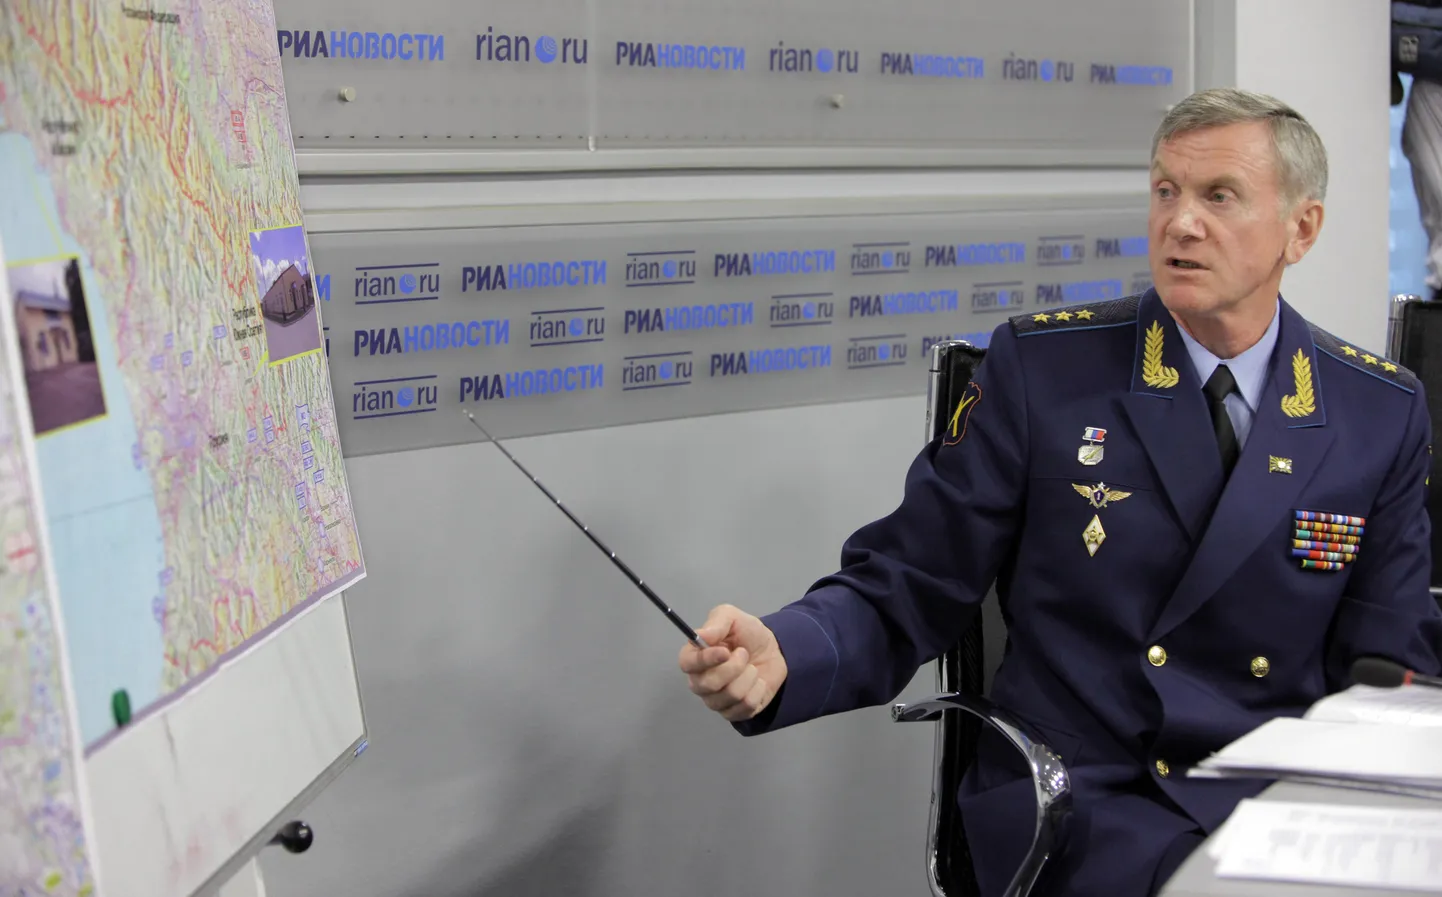 Vene kindralstaabi asejuht Anatoli Nogovitsõn